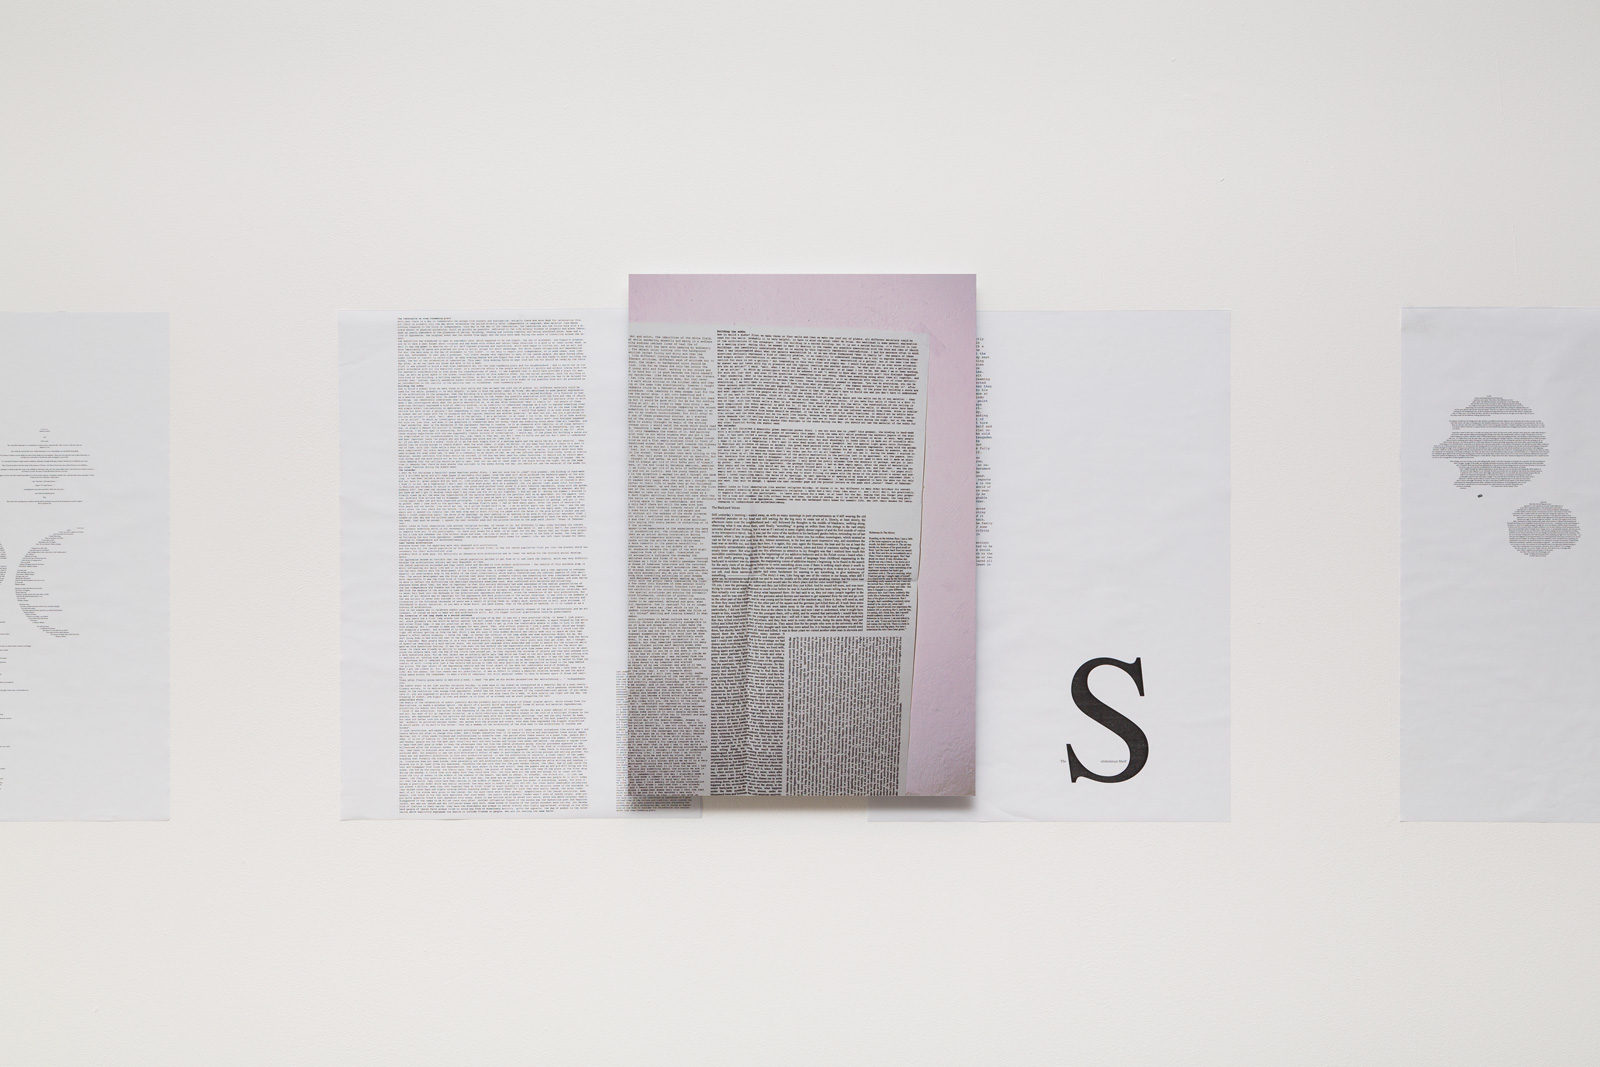 Josef Strau
The Reprints: Building the Sukka, 2014
6 of 7 dibond prints
60 x 40 cm
23 5/8 x 15 3/4 ins. My Divid’ed House
, Josef Strau